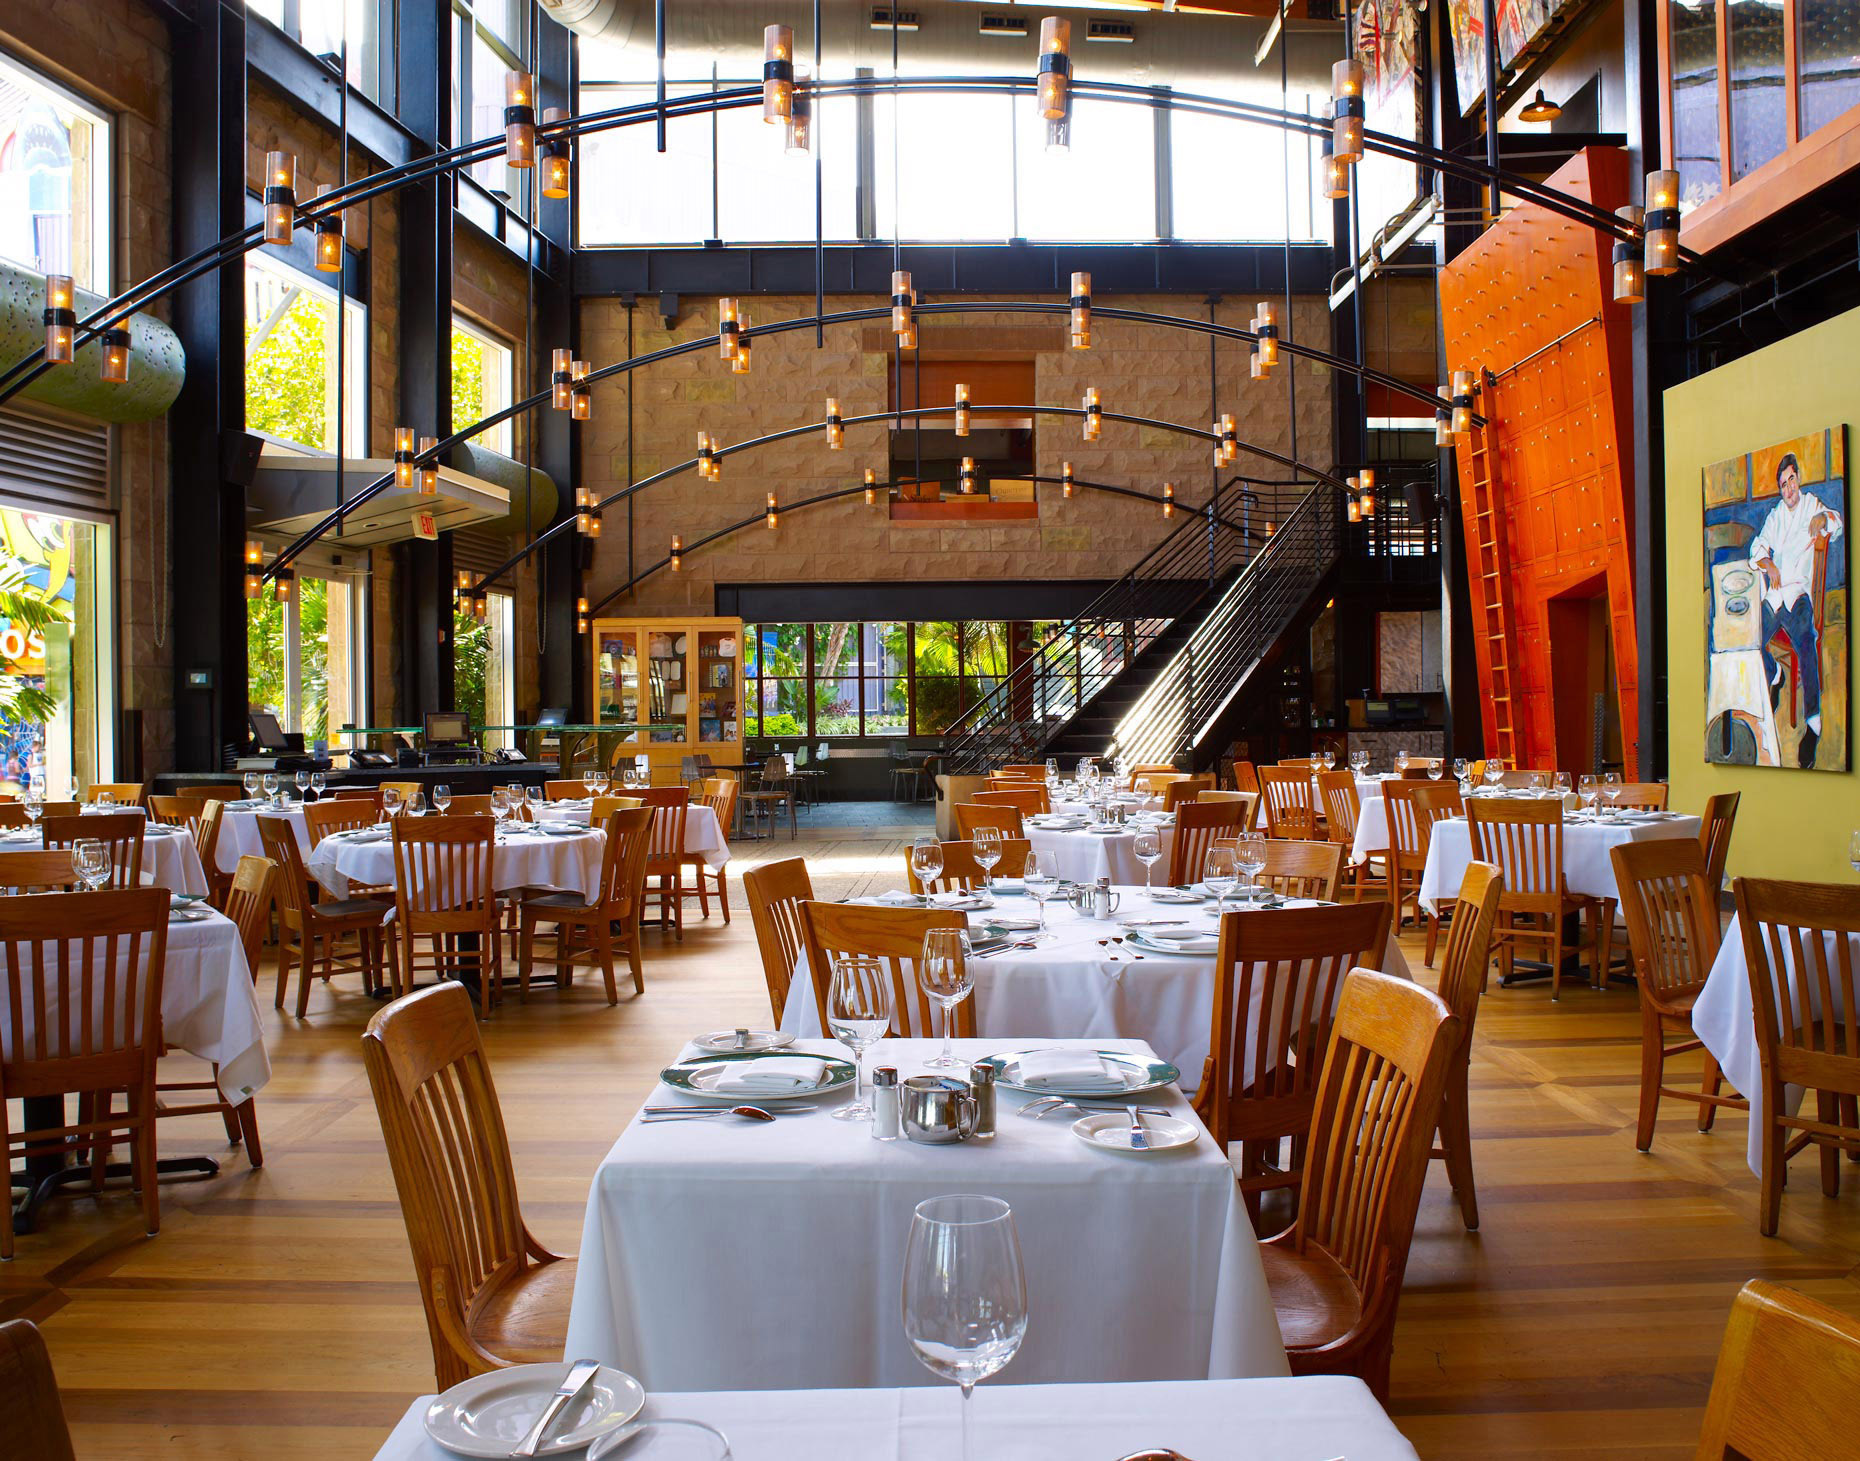 Emerils Restaurant | Architecture Photographer Orlando